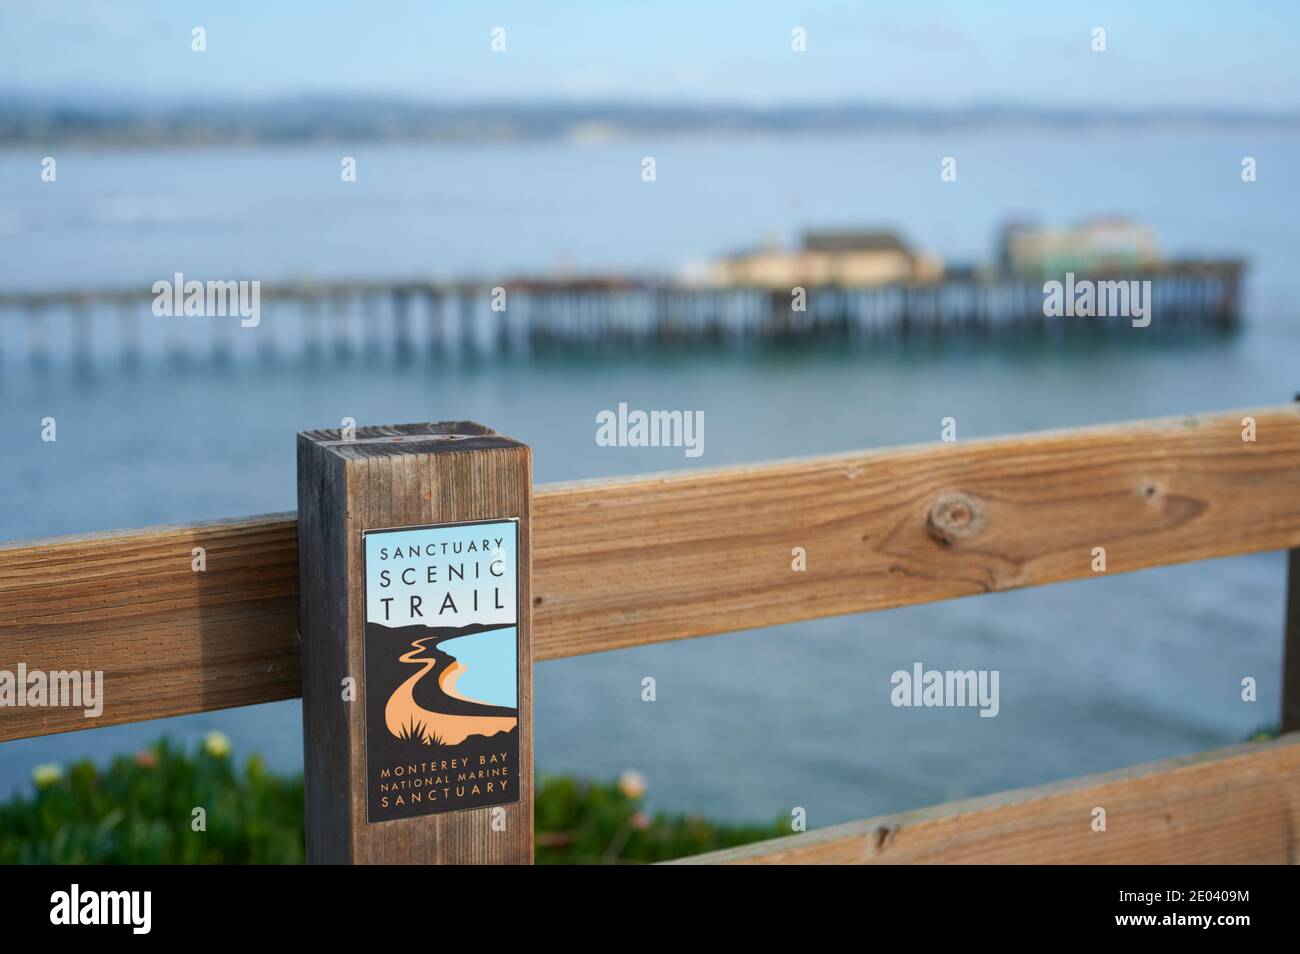 Sentiero panoramico del Monterey Bay National Marine Sanctuary (MBNMS), Capitola CA Foto Stock